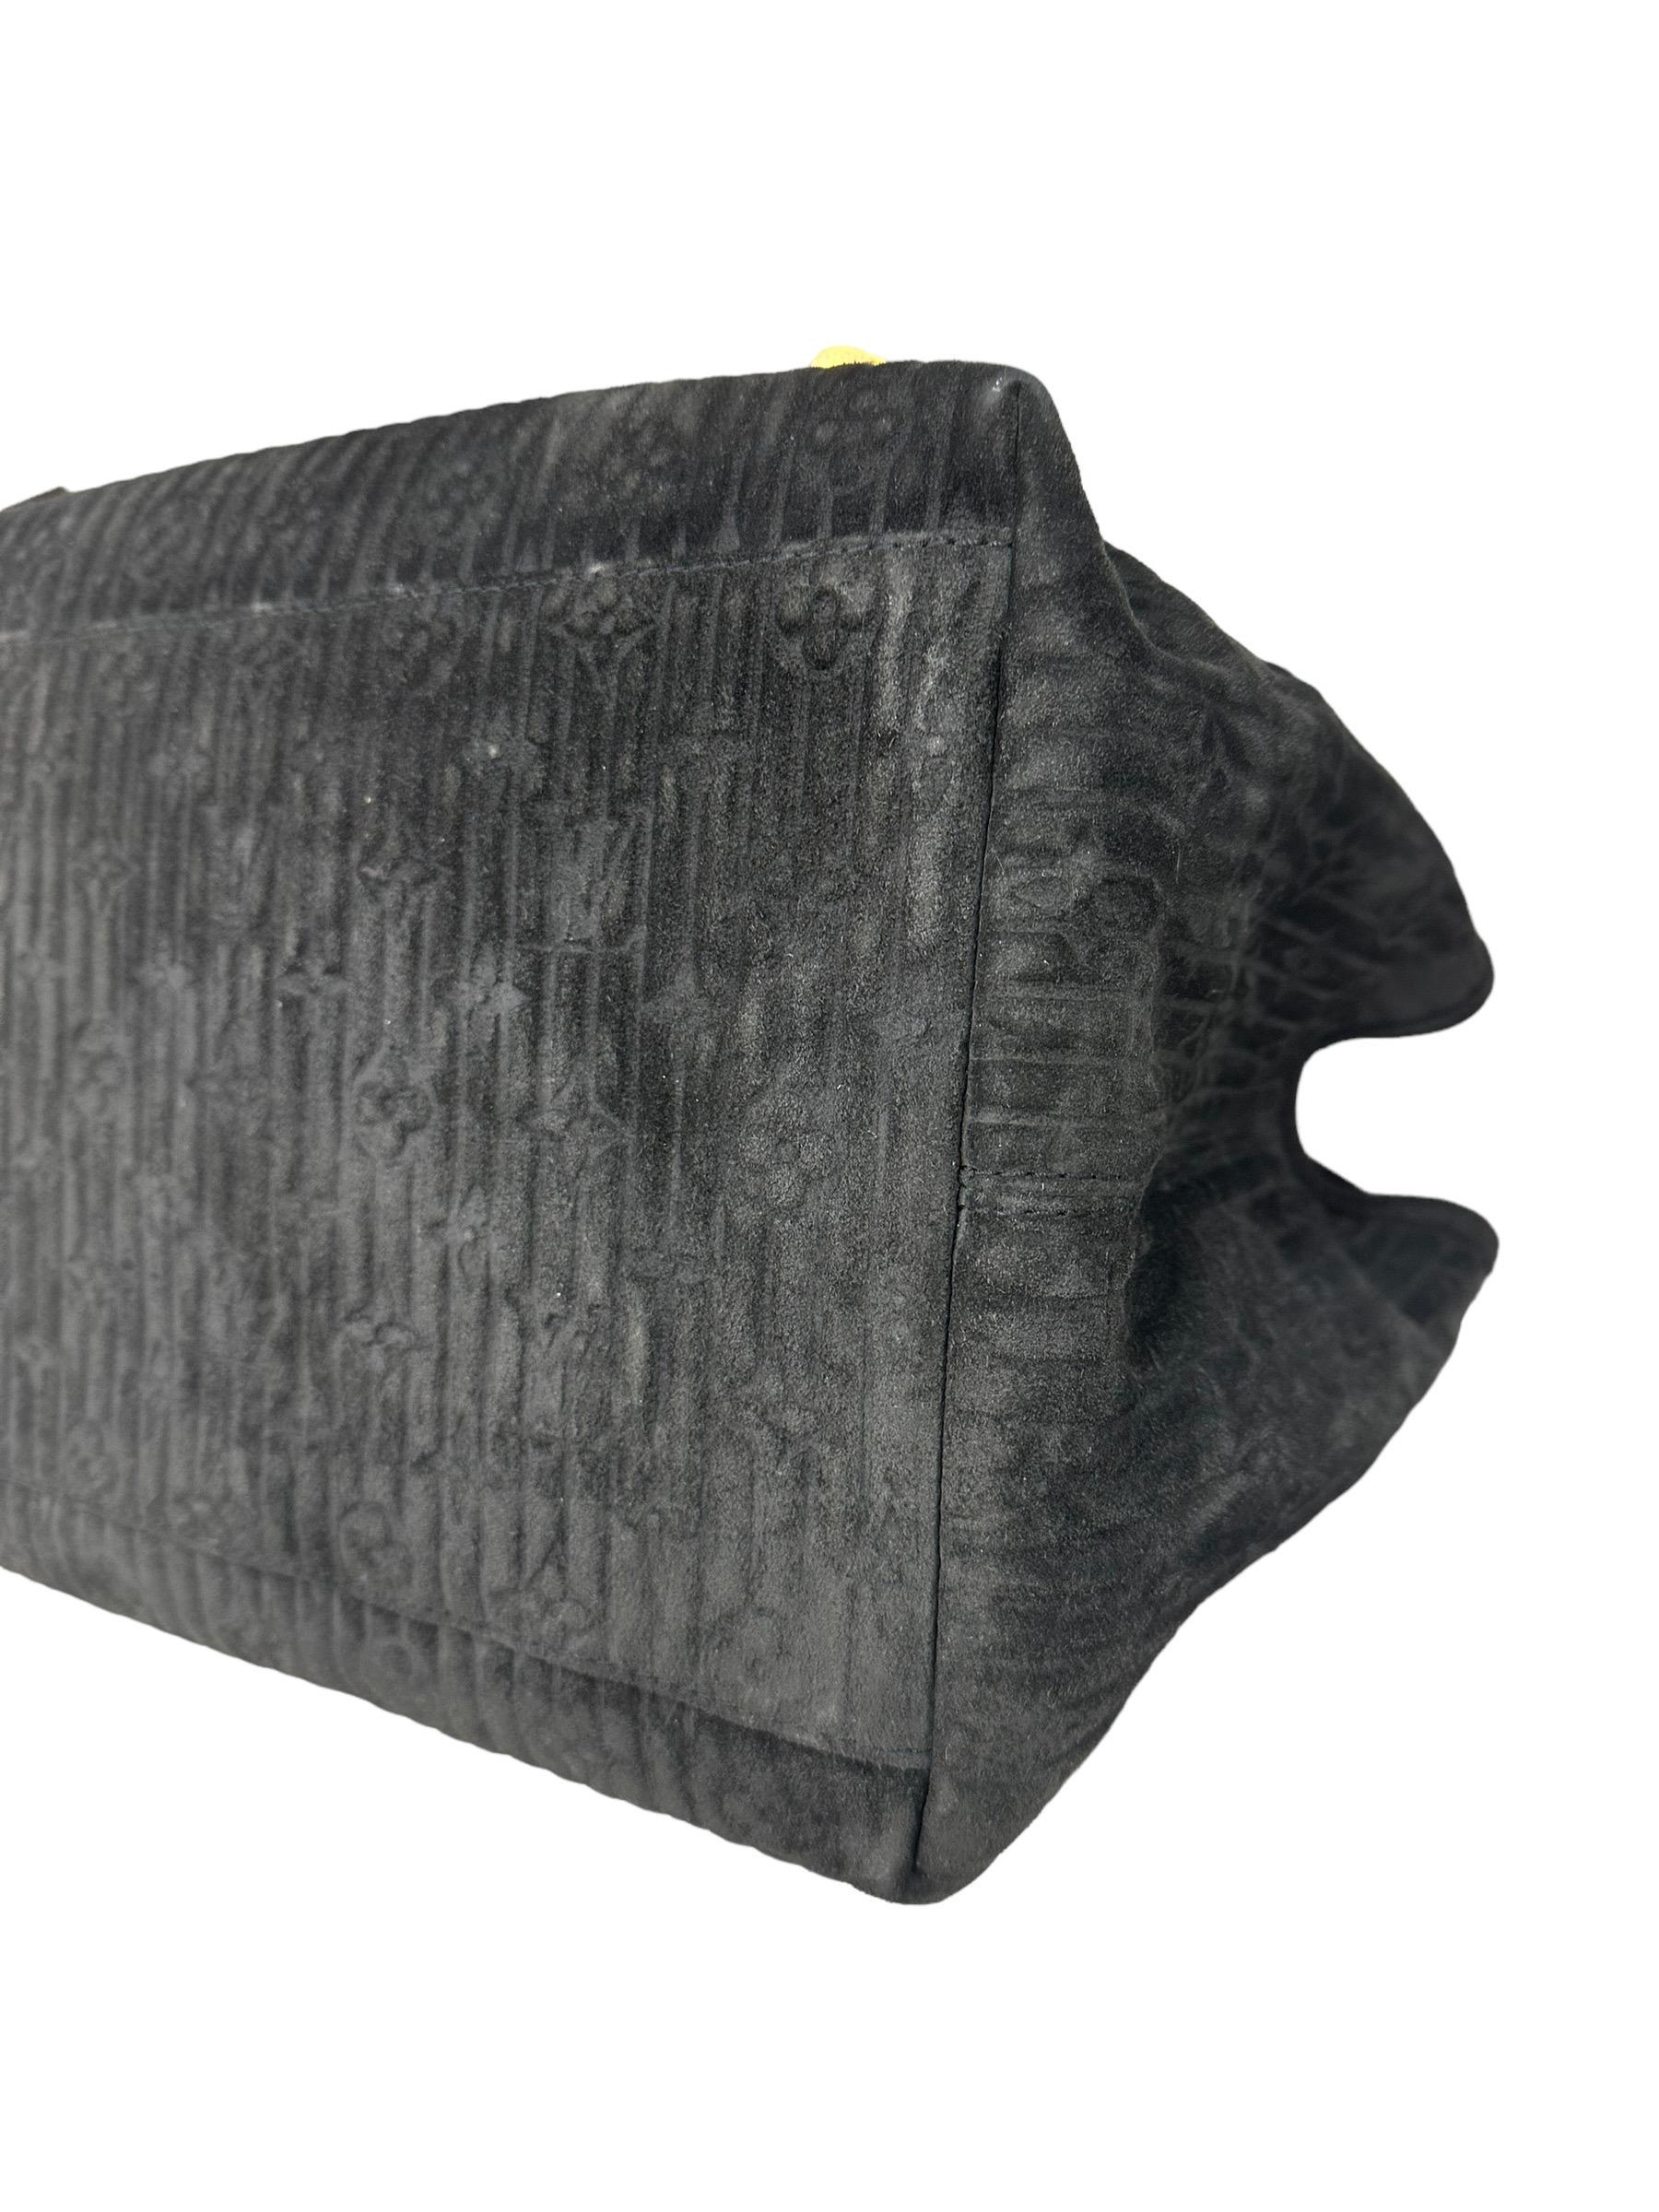 2008 Lousi Vuitton Whisper Black Suede Top Handle Bag Limited Edition For Sale 11